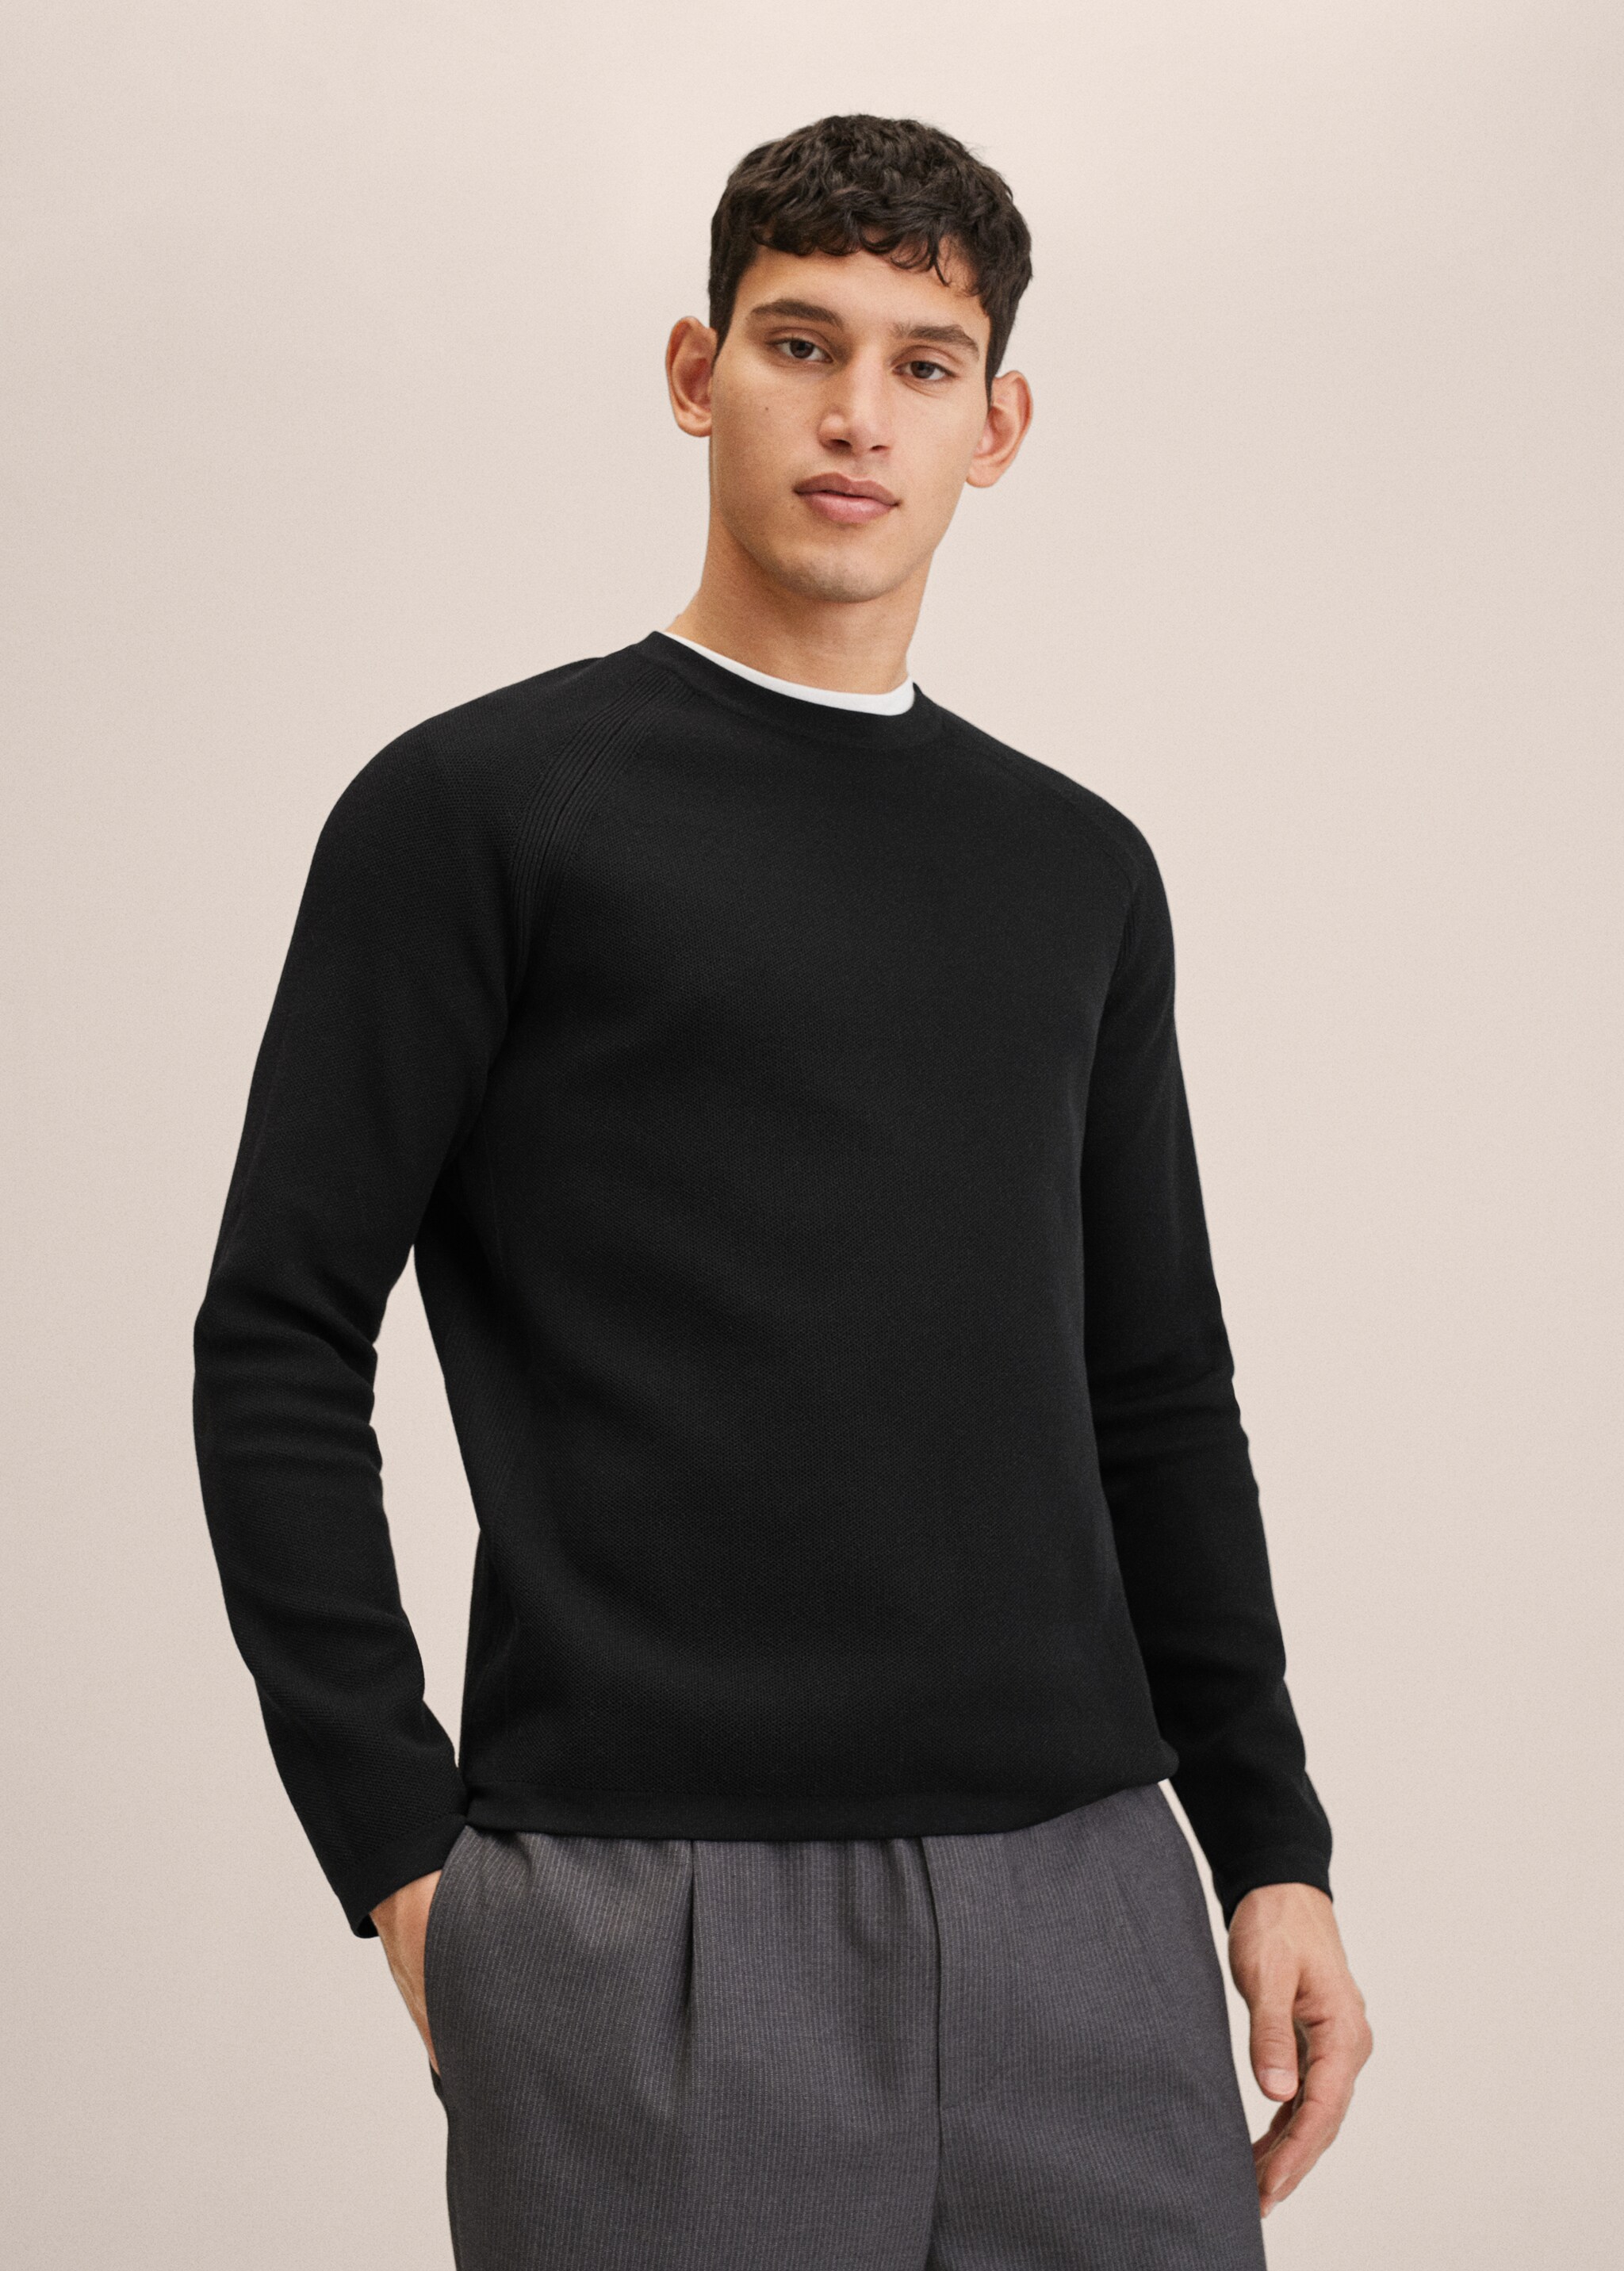 Crease-resistant stretch sweater - Medium plane